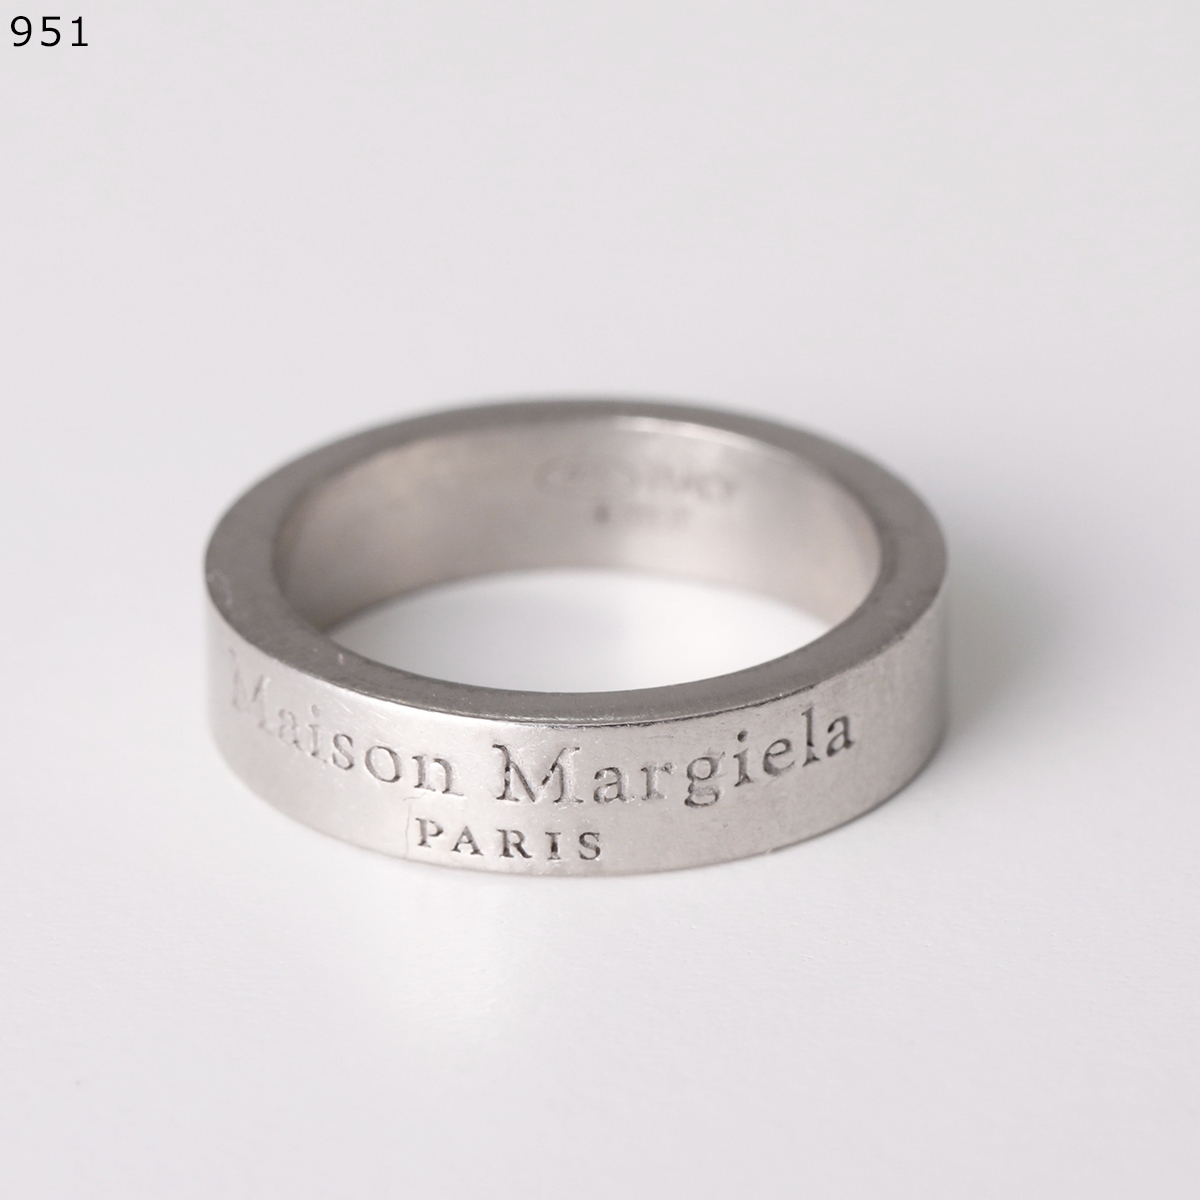 MAISON MARGIELA メゾンマルジェラ 11 リング SM1UQ0081 SV0158 レディース ミディアム アクセサリー 指輪 ロゴ  シルバー925 silver925 カラー3色